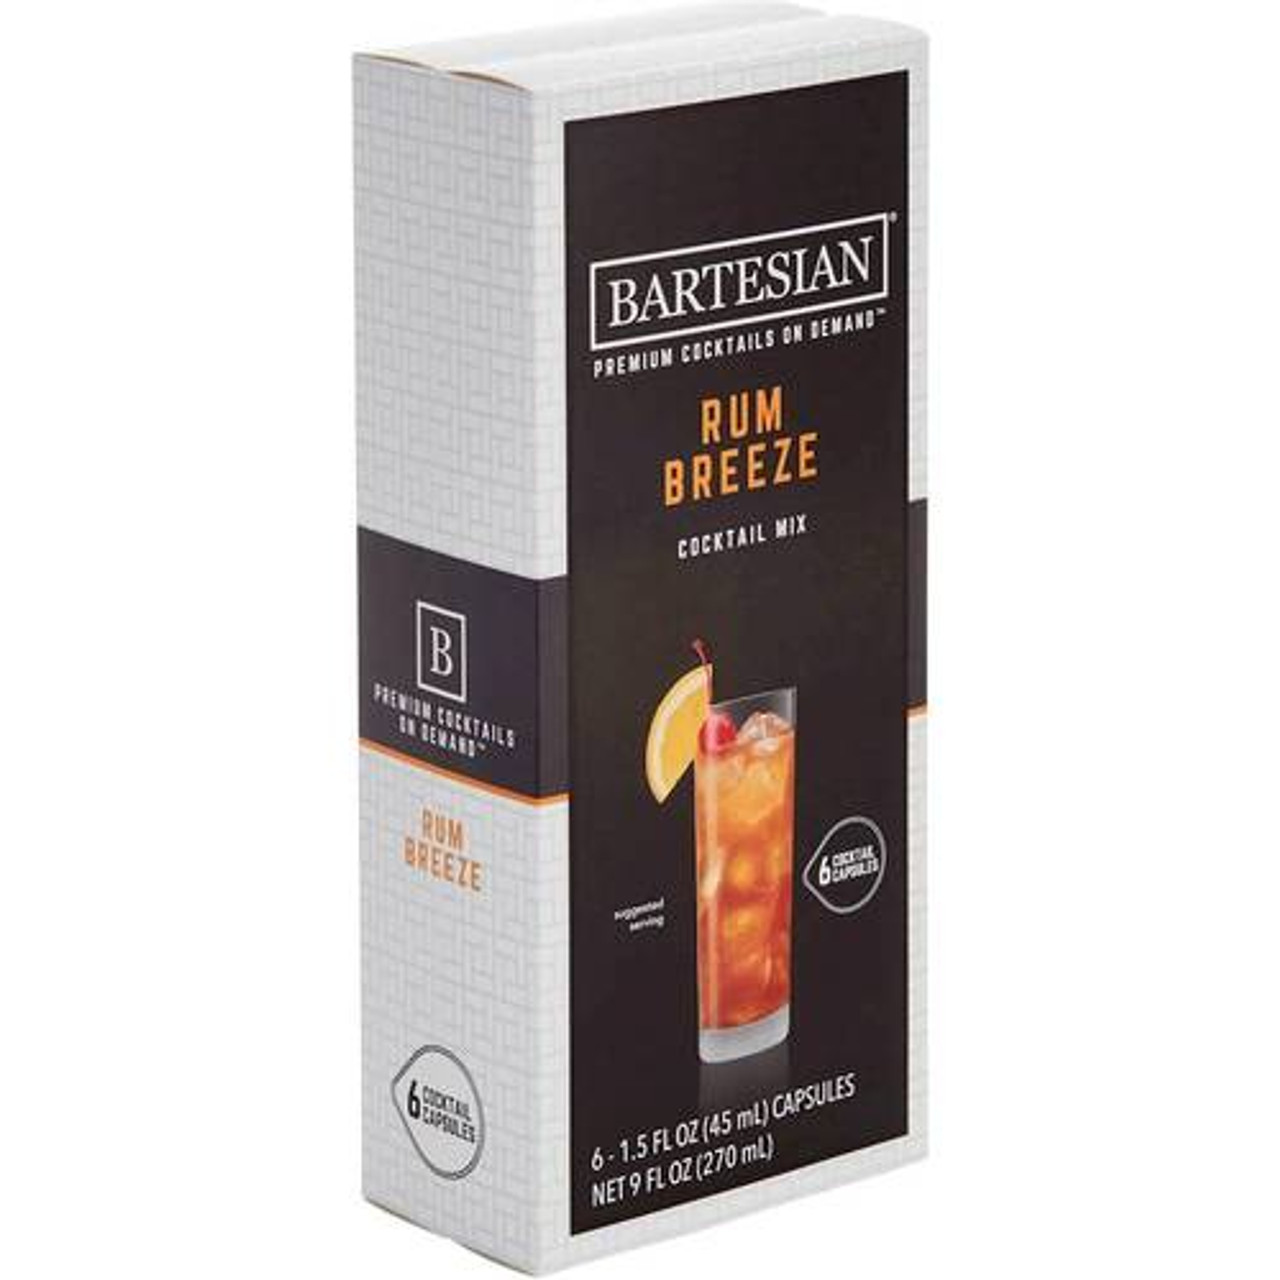 Bartesian - Rum Breeze Cocktail Mix Capsule for Bartesian Cocktail Maker (6-Pack)